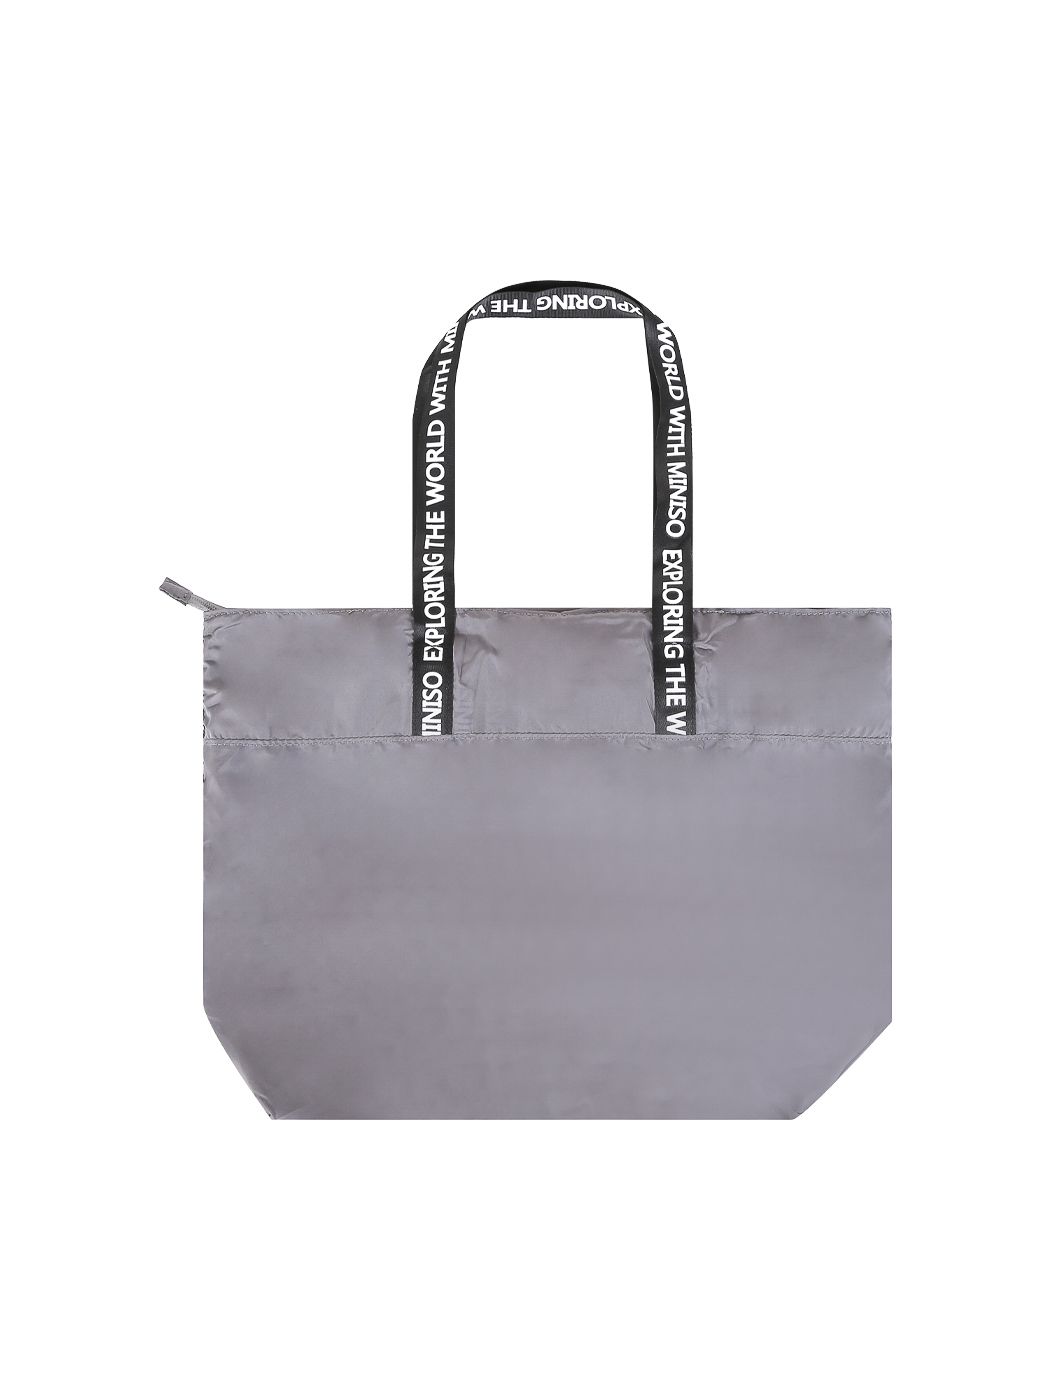 MINIGO Single Shoulder Trapezoid Foldable Bag (Grey) - MINISO